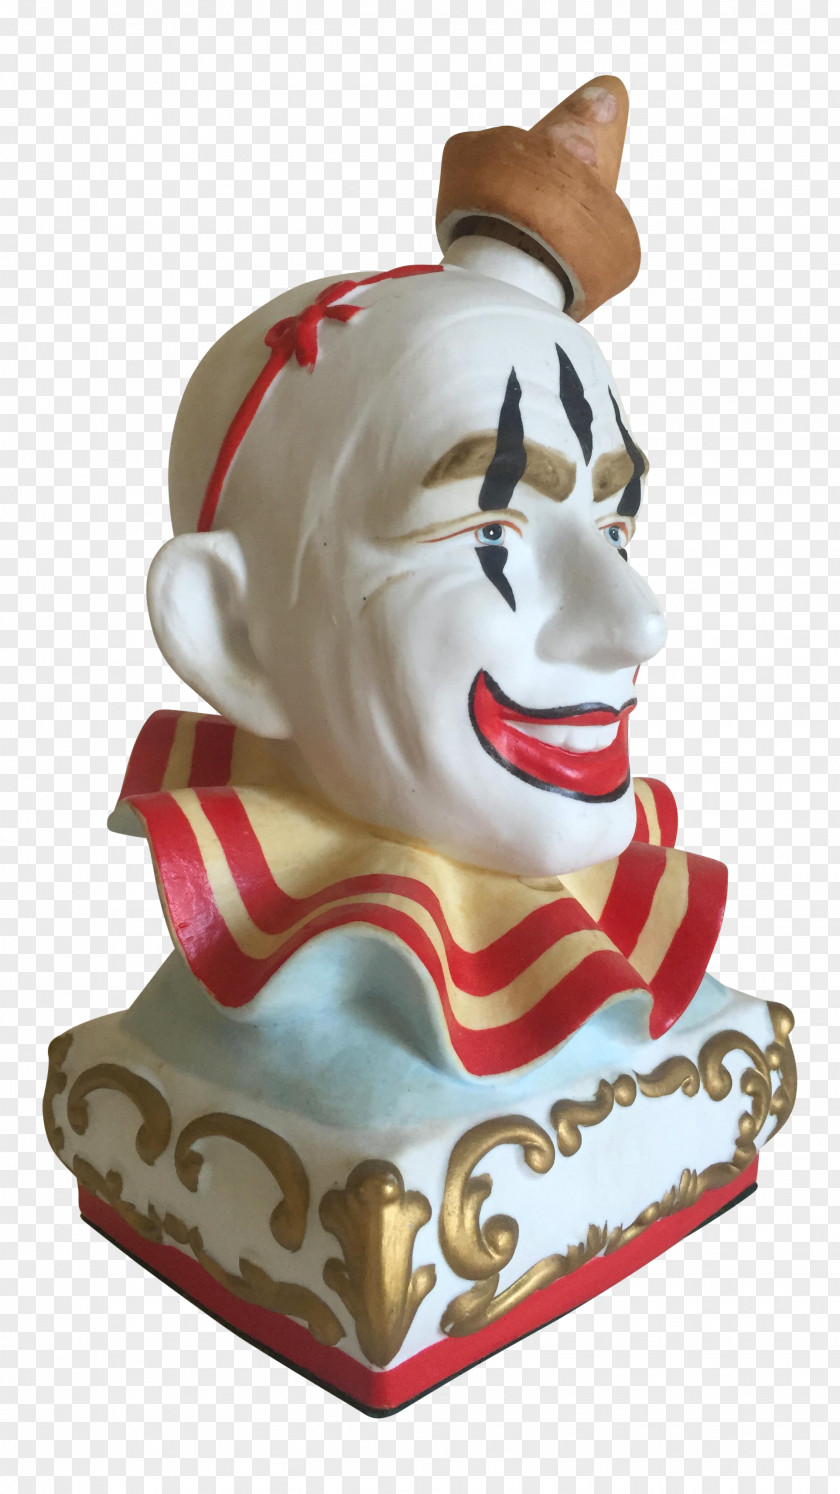 Clown Ceramic Figurine Mid-century Modern Chairish PNG